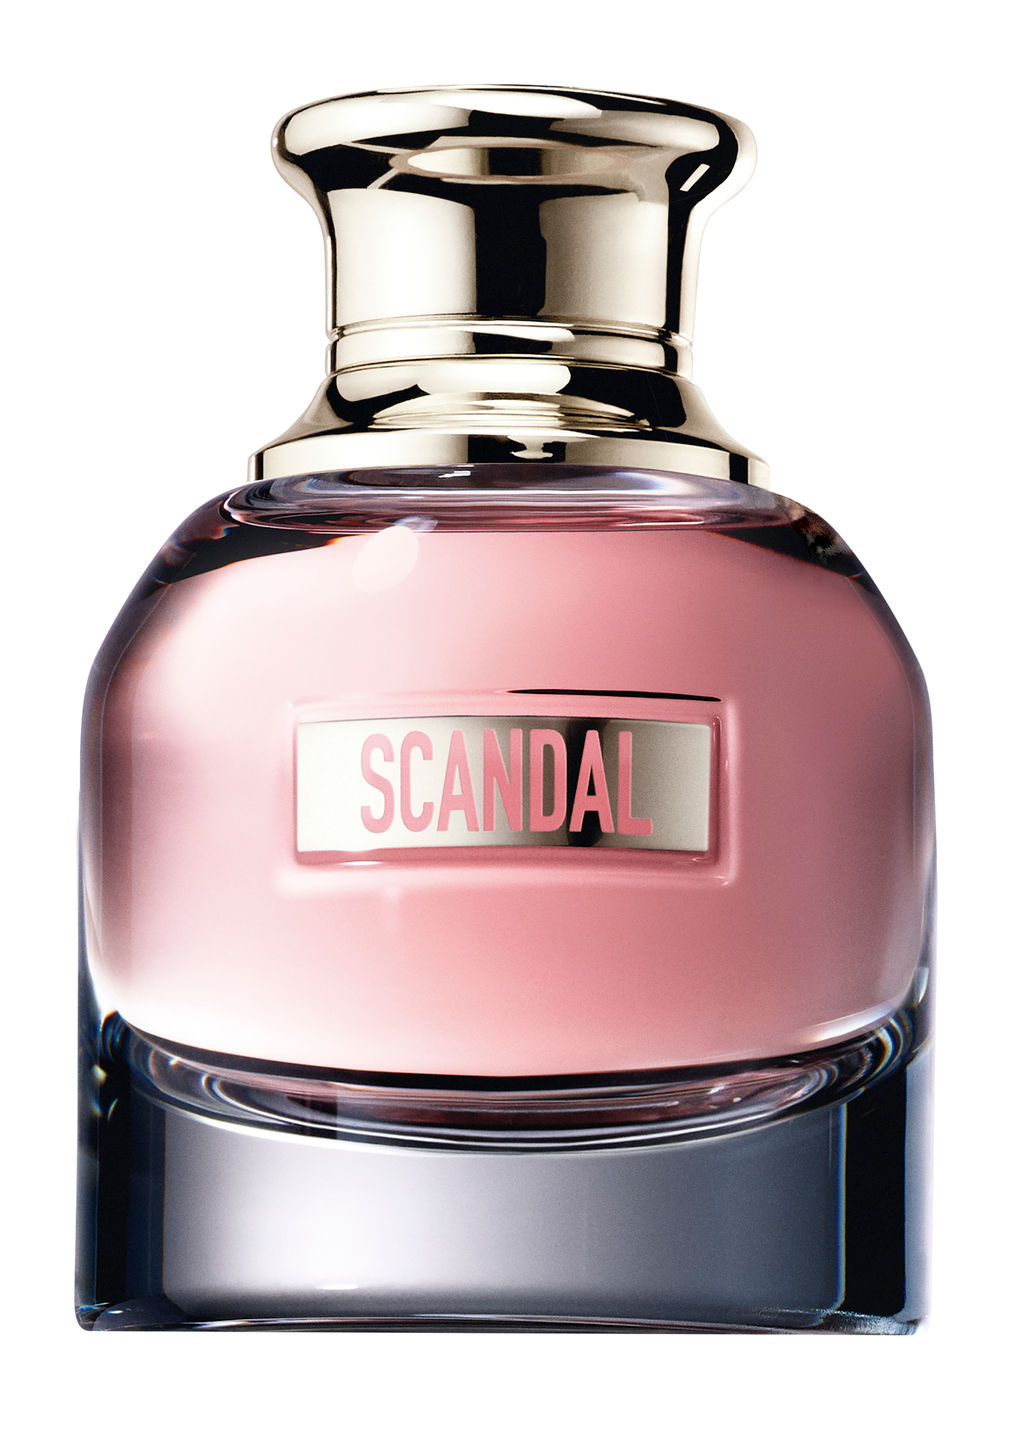 Jean Paul Gaultier Scandal Eau de Parfum Spray 30 ml